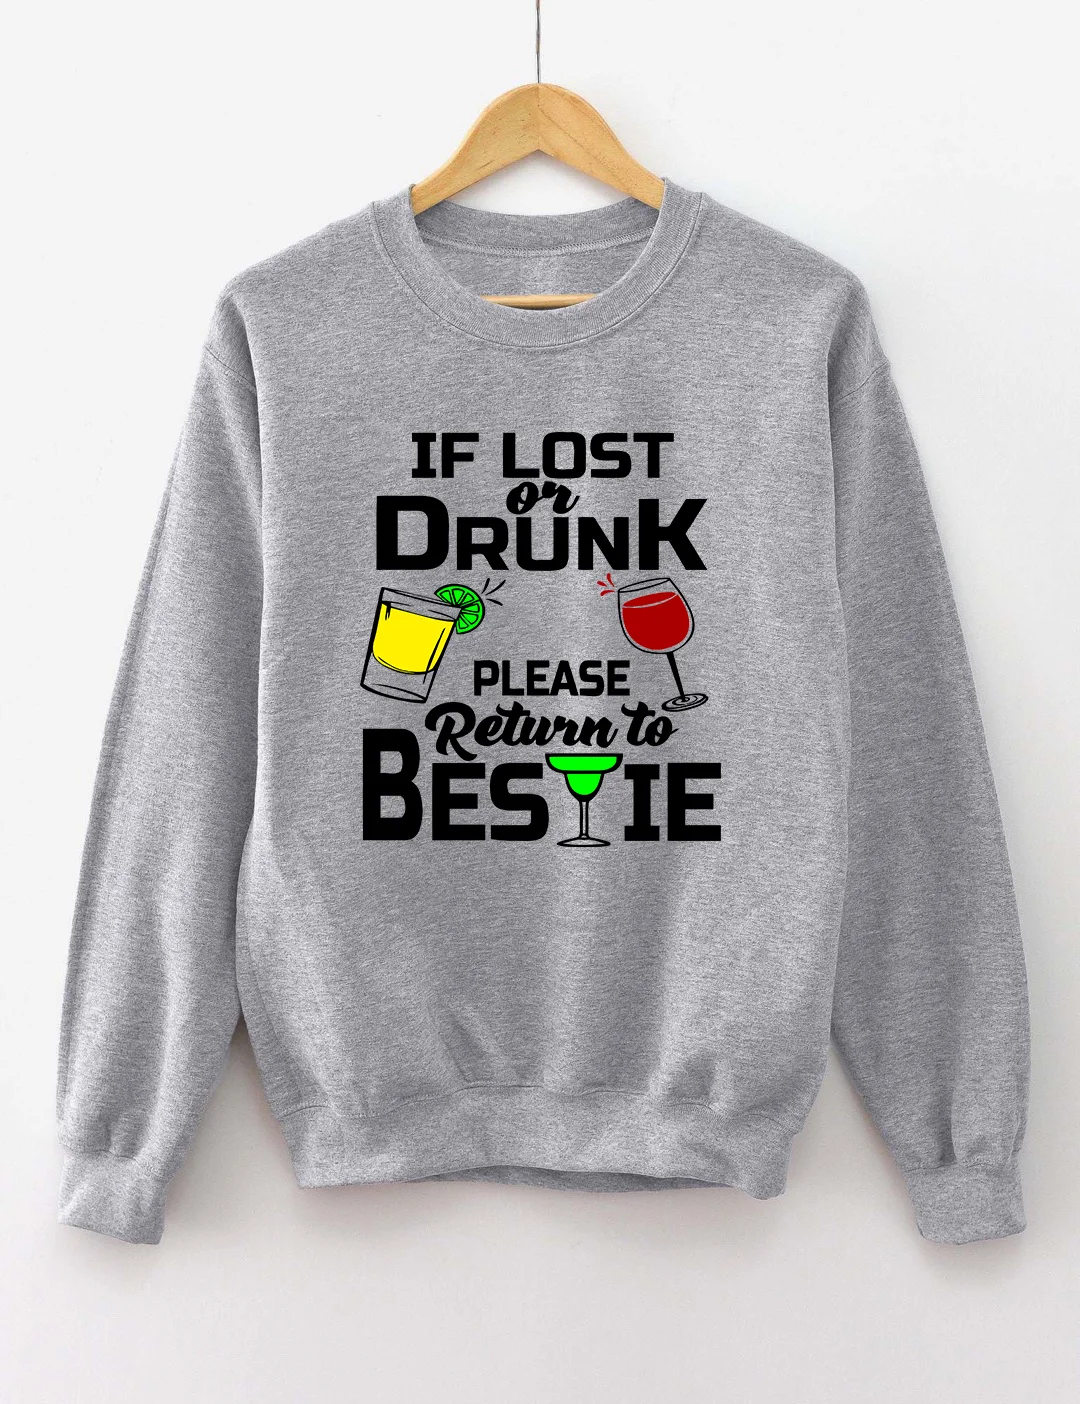 If Lost Or Drunk Please Return To Bestie Sweatshirt